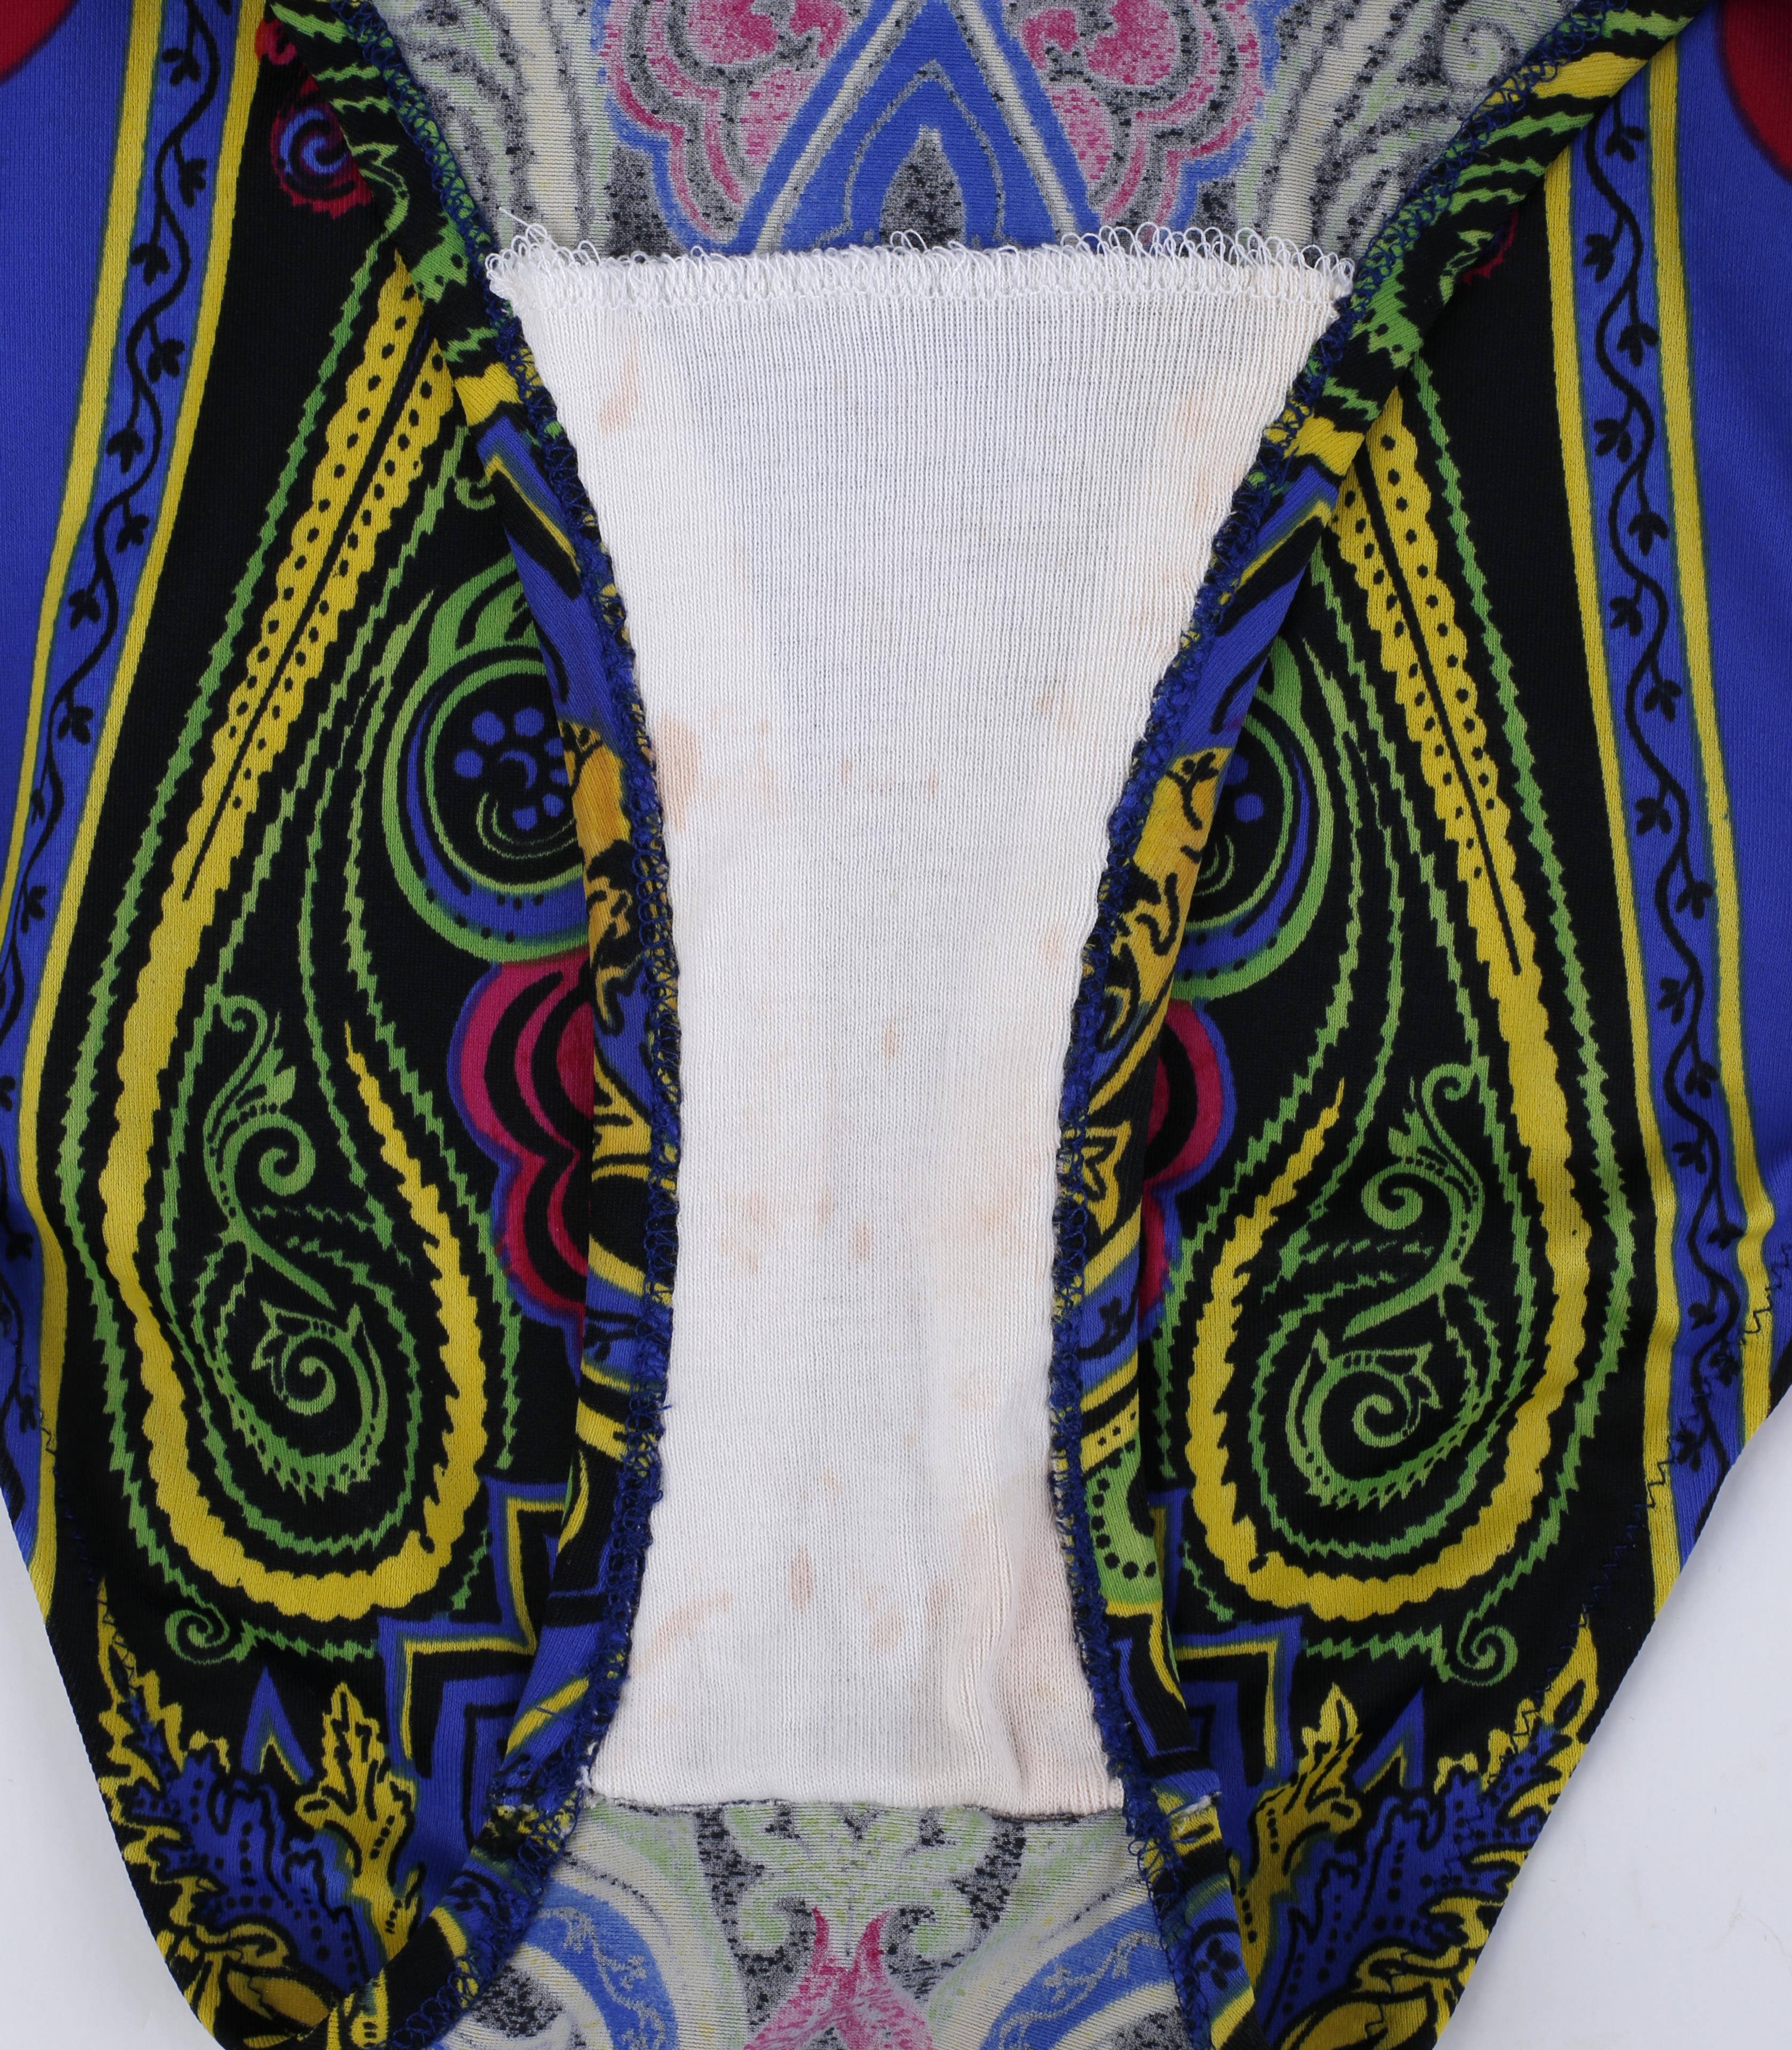 Gianni Versace S/S 1991 Pop Art Baroque Print Swimsuit Bodysuit & Skirt Set For Sale 10